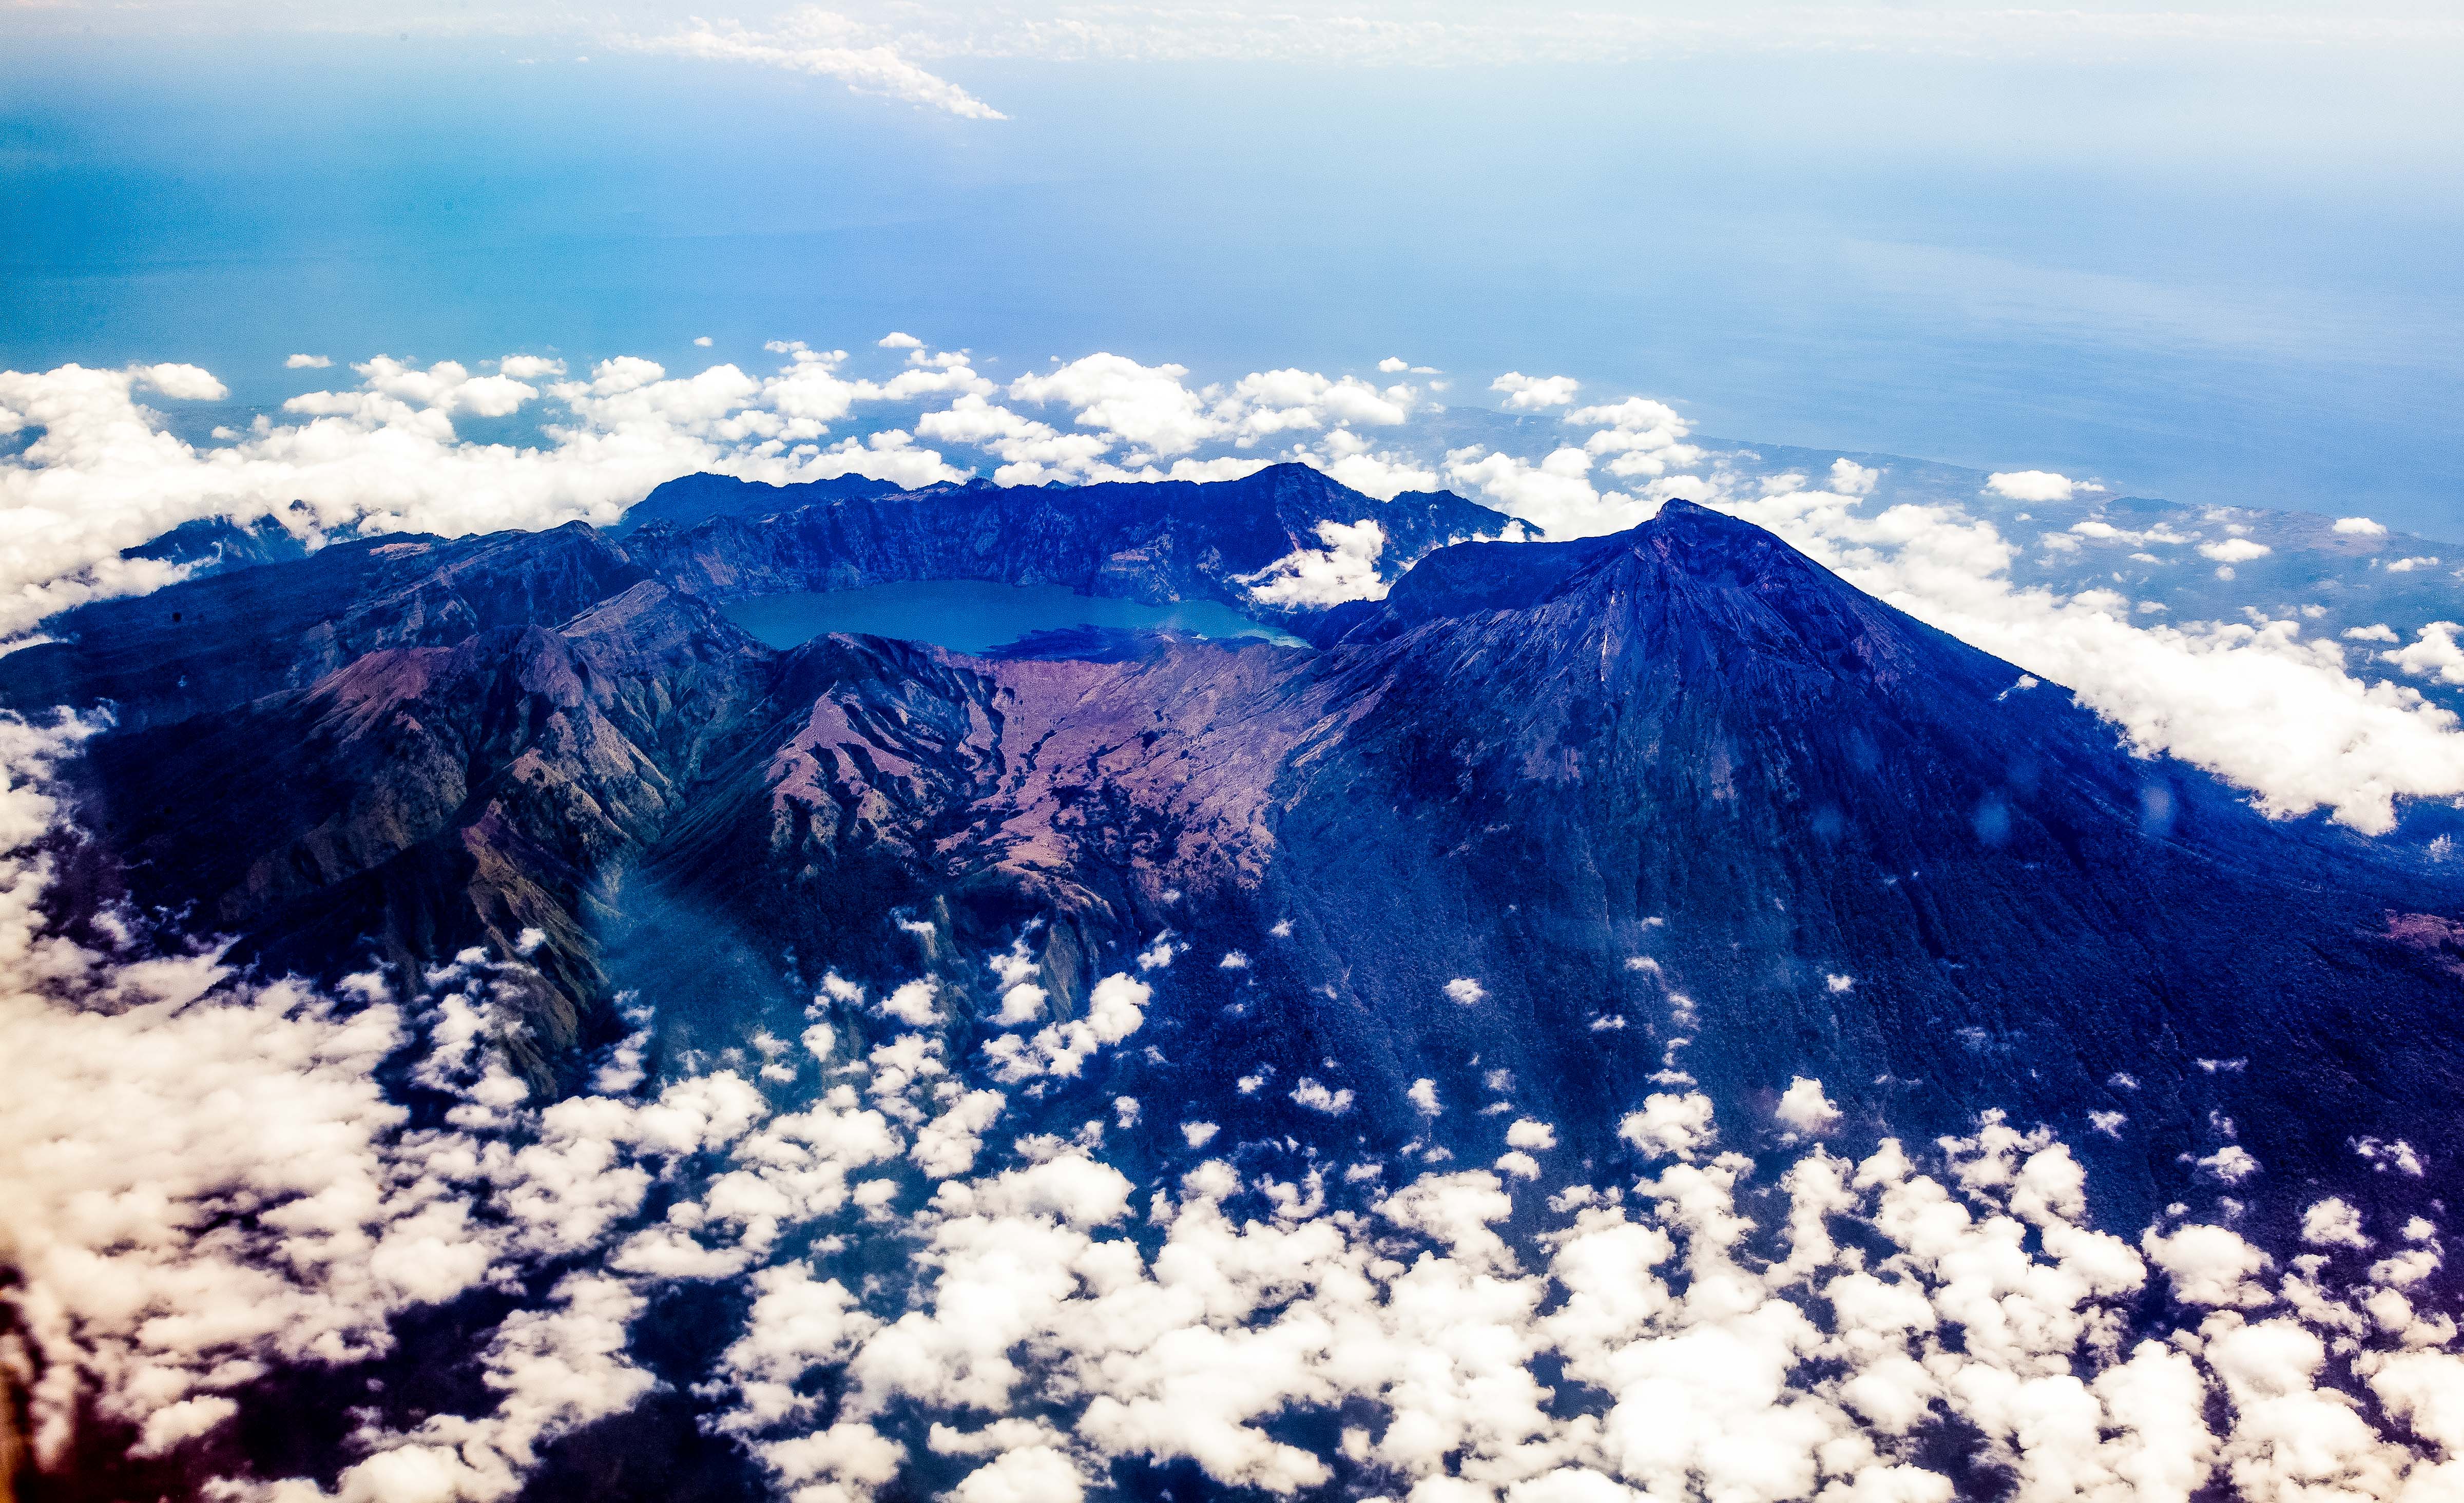 Indonesia, Nusa Tenggara Barat Prov, Lombok Volcano, 2011, IMG 7255